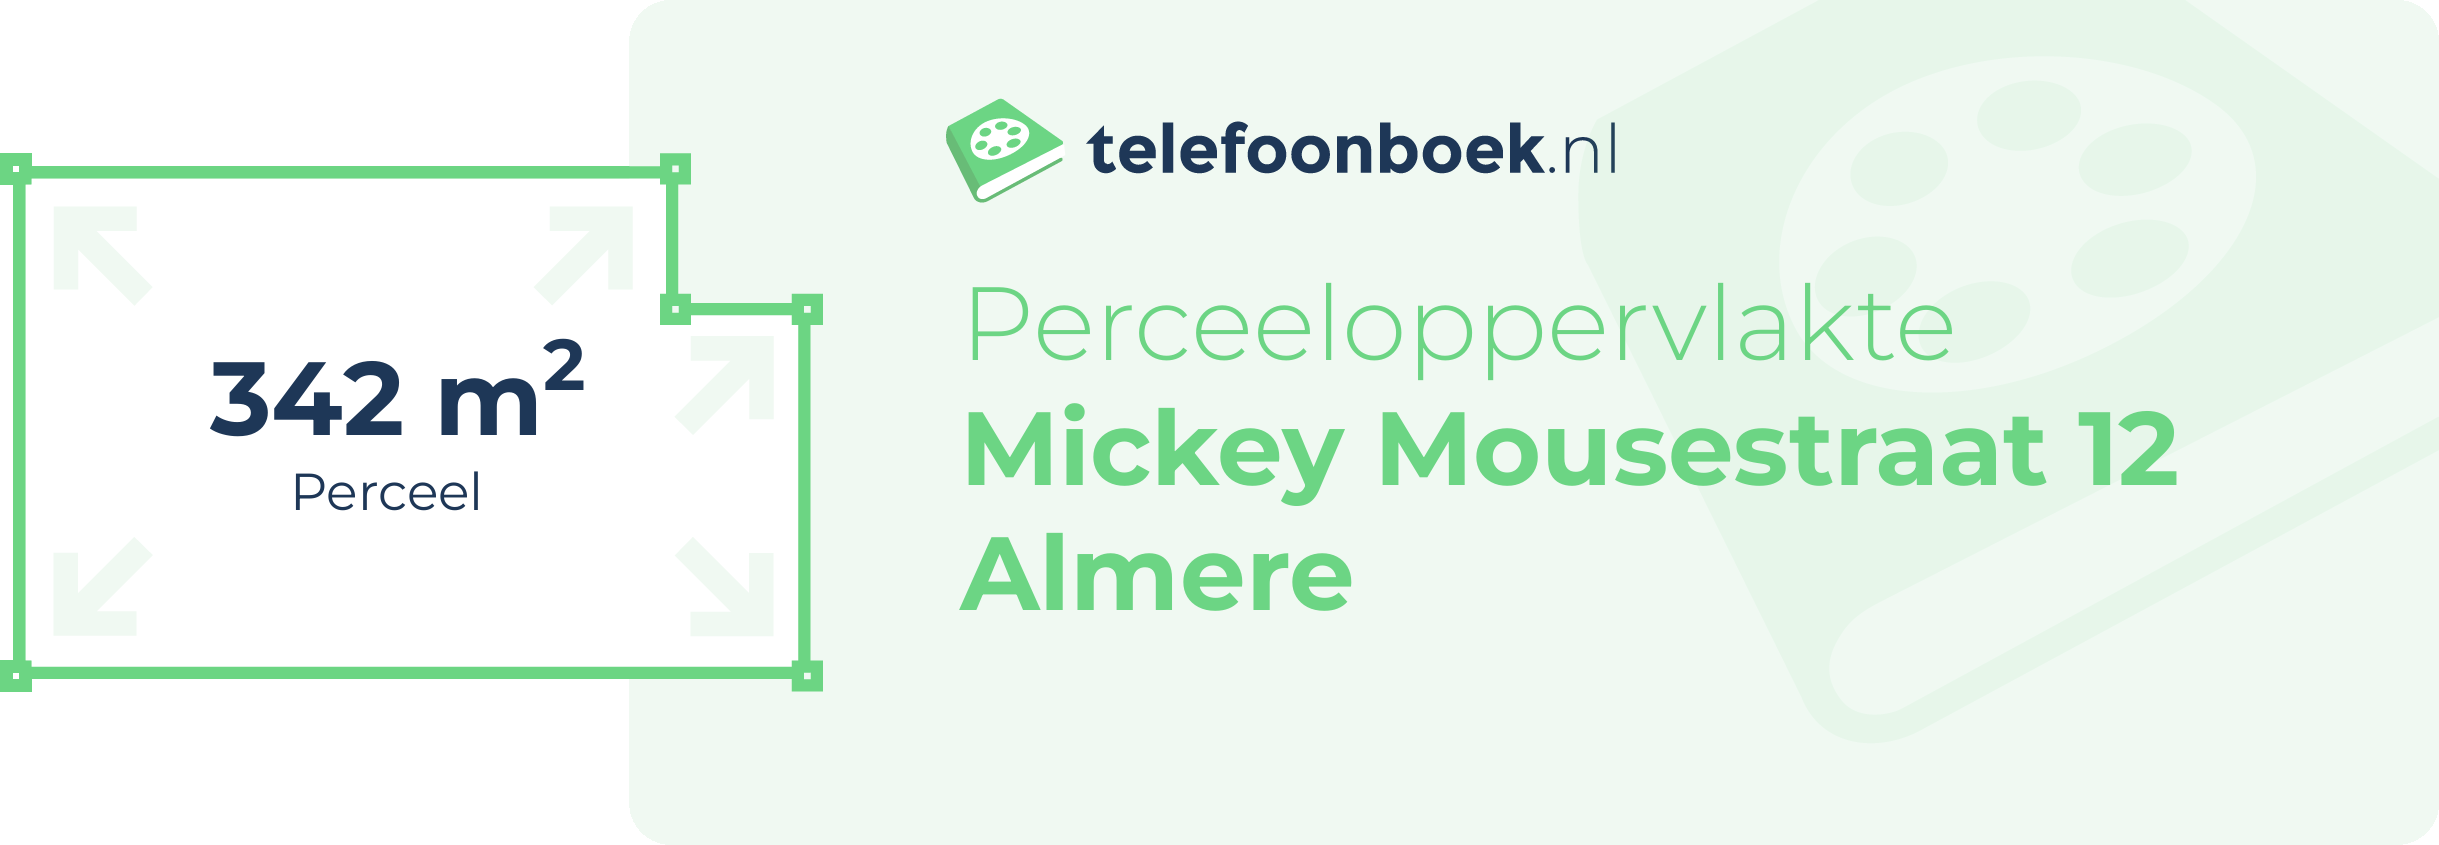 Perceeloppervlakte Mickey Mousestraat 12 Almere